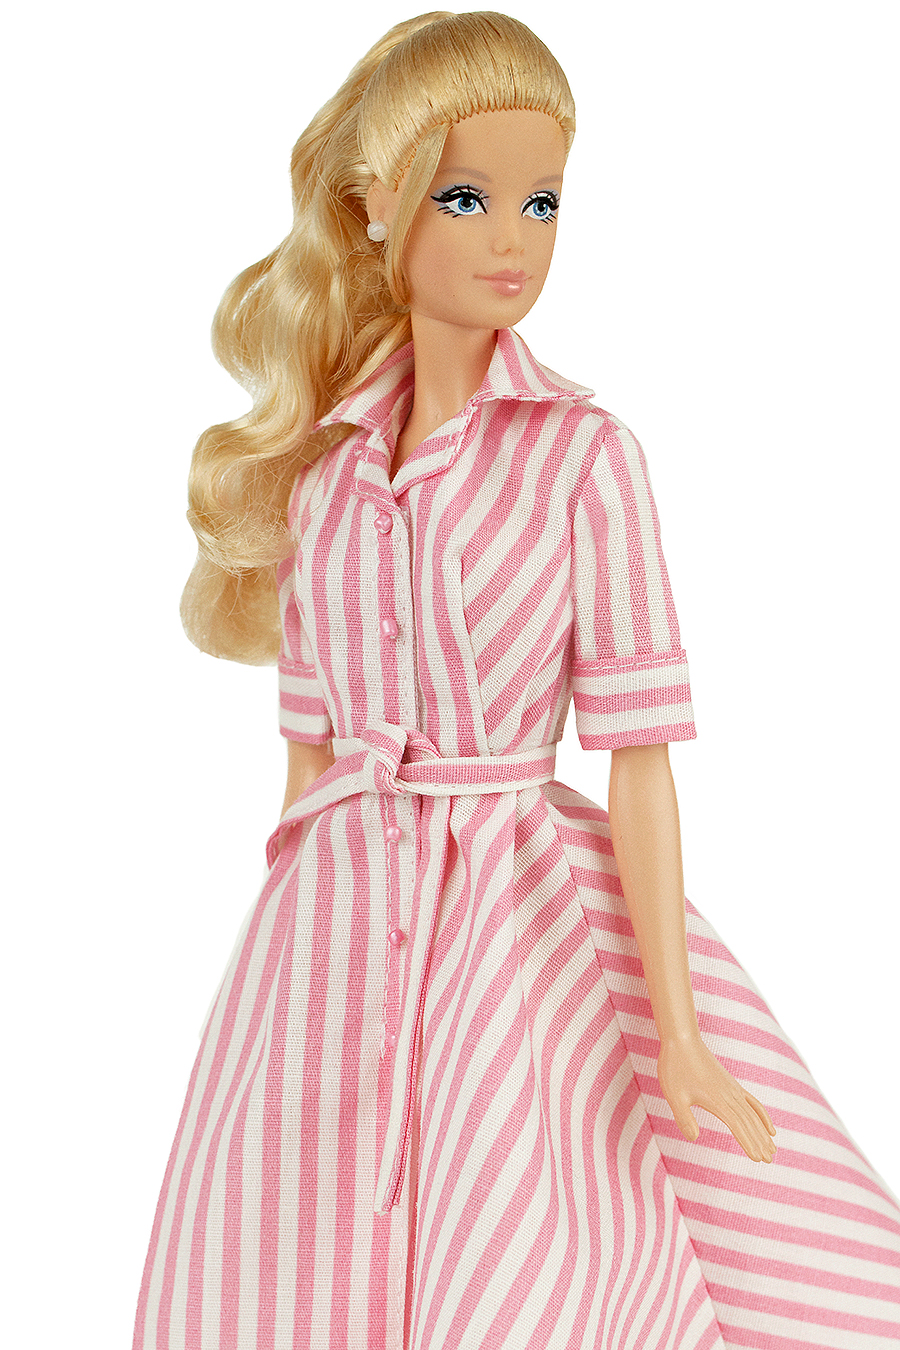 ELENPRIV FA008 pink/white checkered dress-shirt for Barbie Pivotal MTM FR2 doll